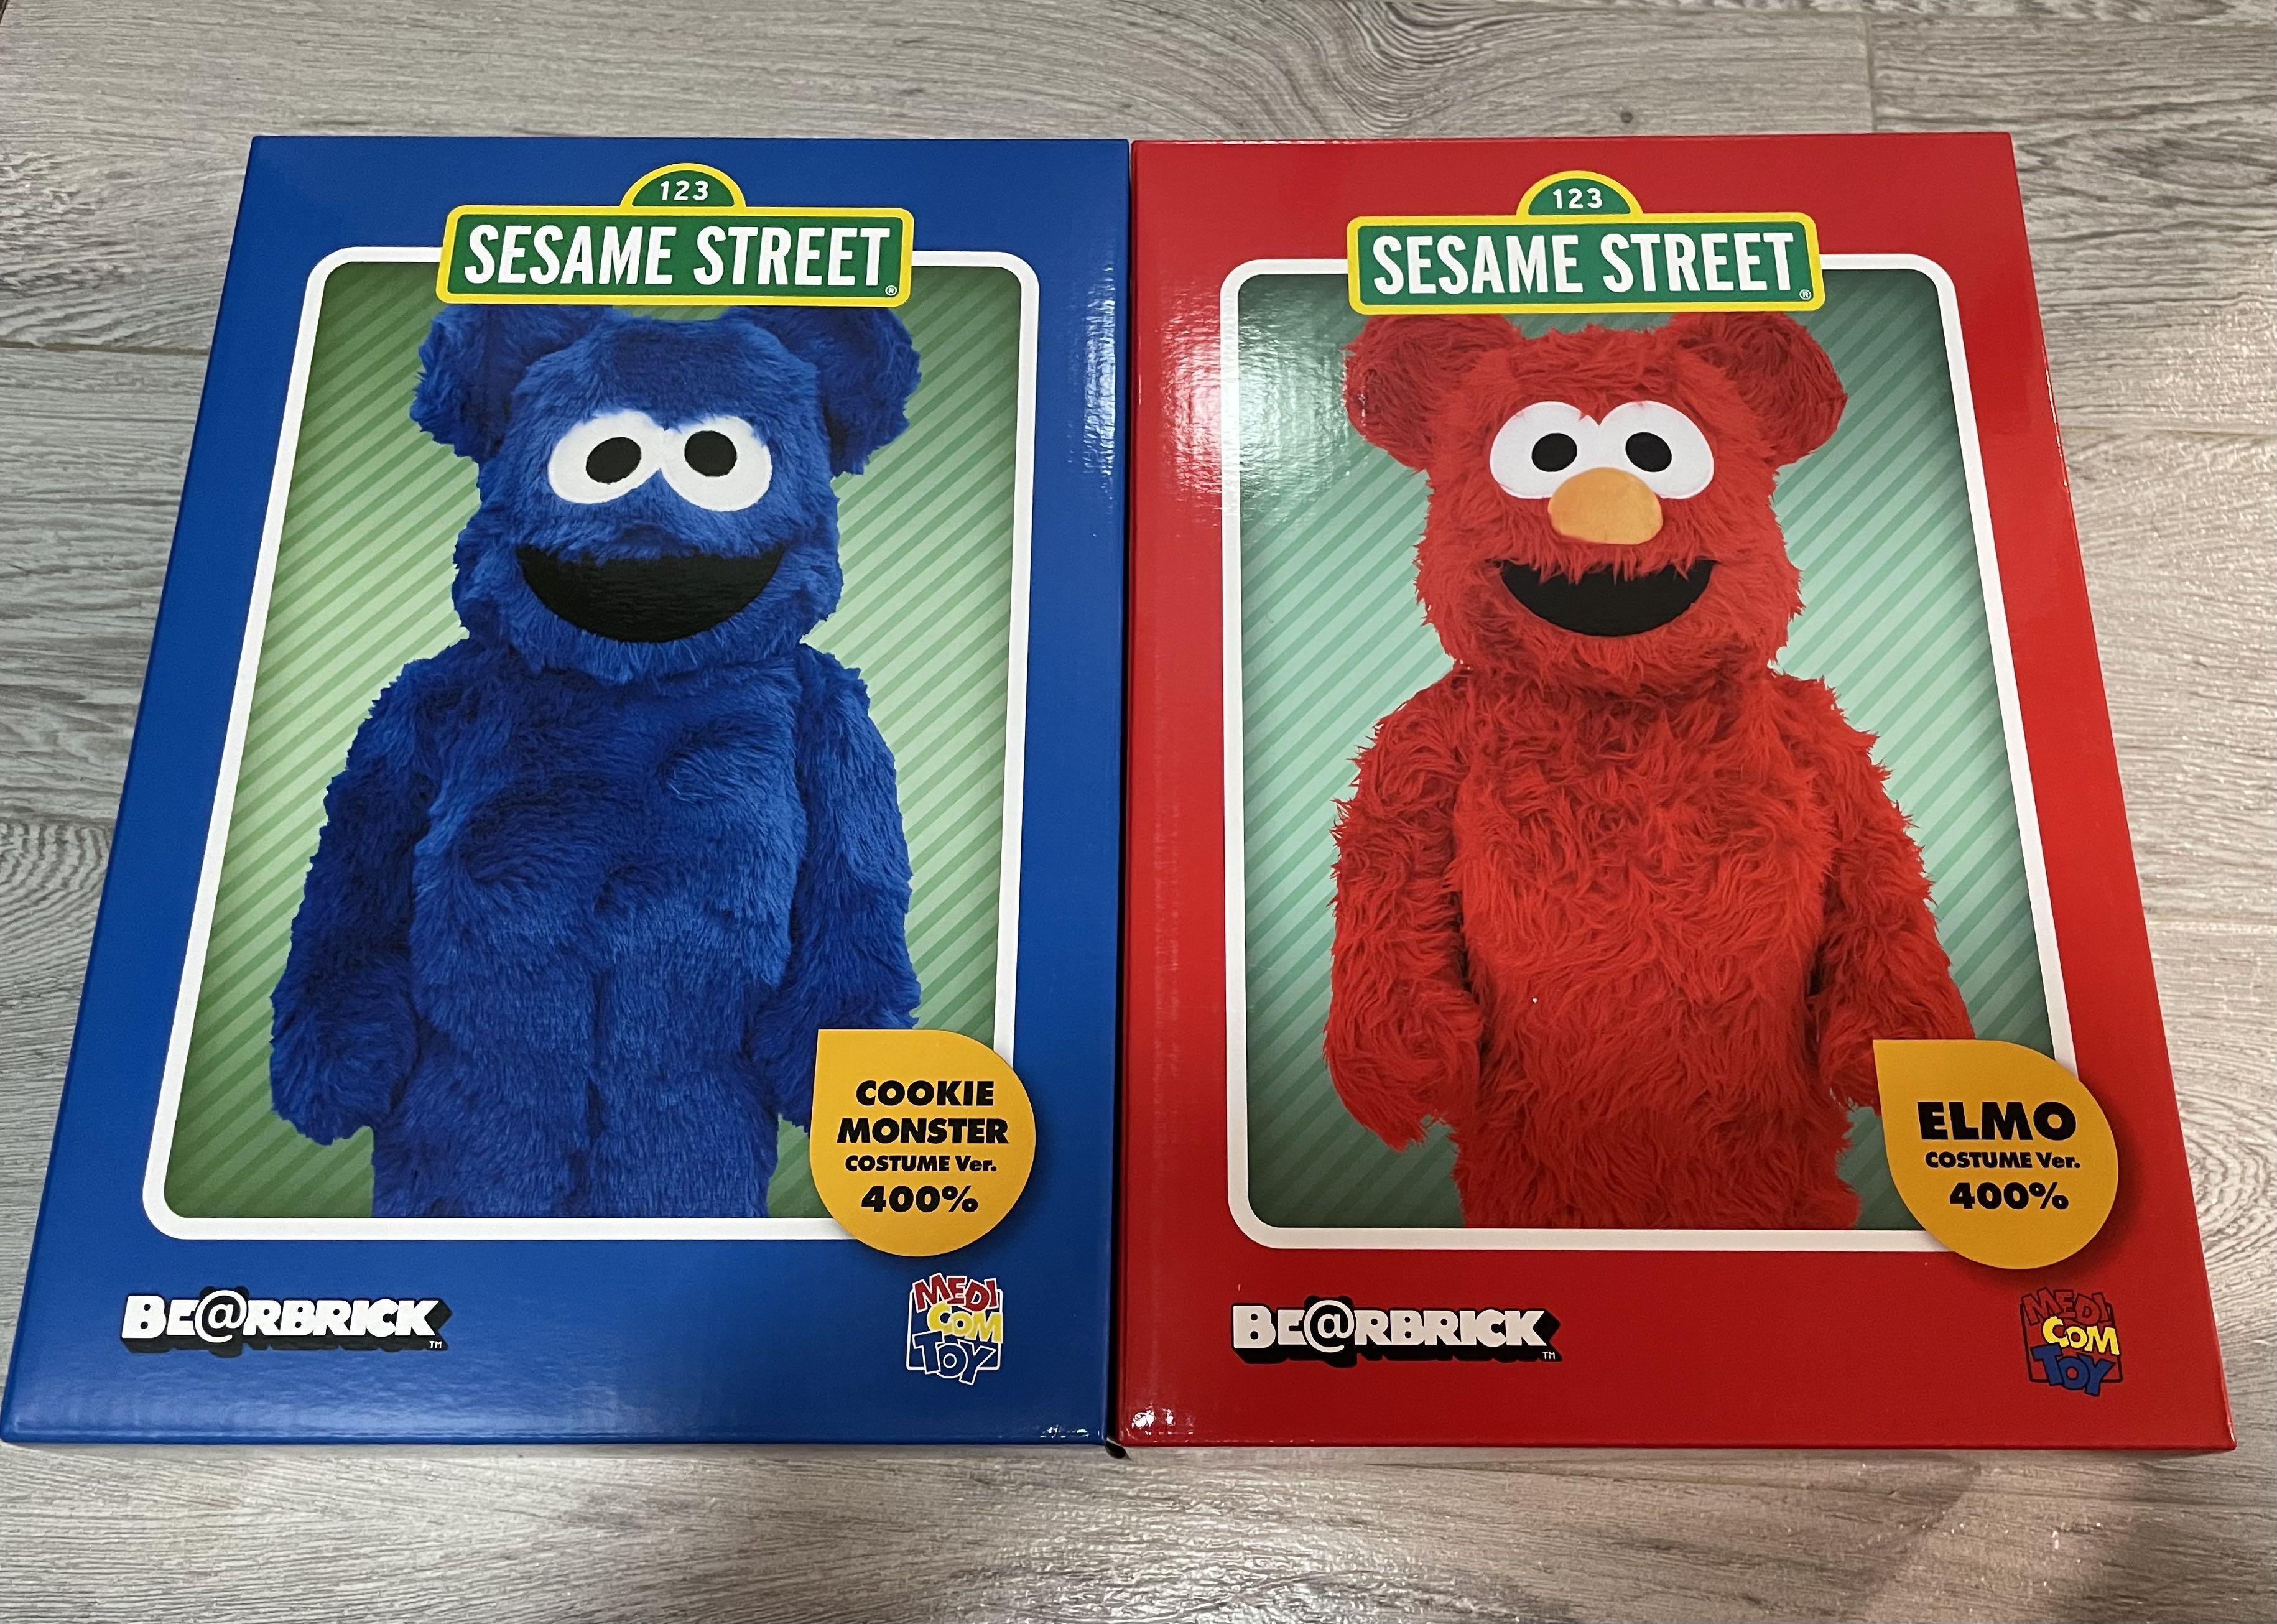 Bearbrick Elmo Cookie Monster costume ver. 400% be@rbrick Sesame